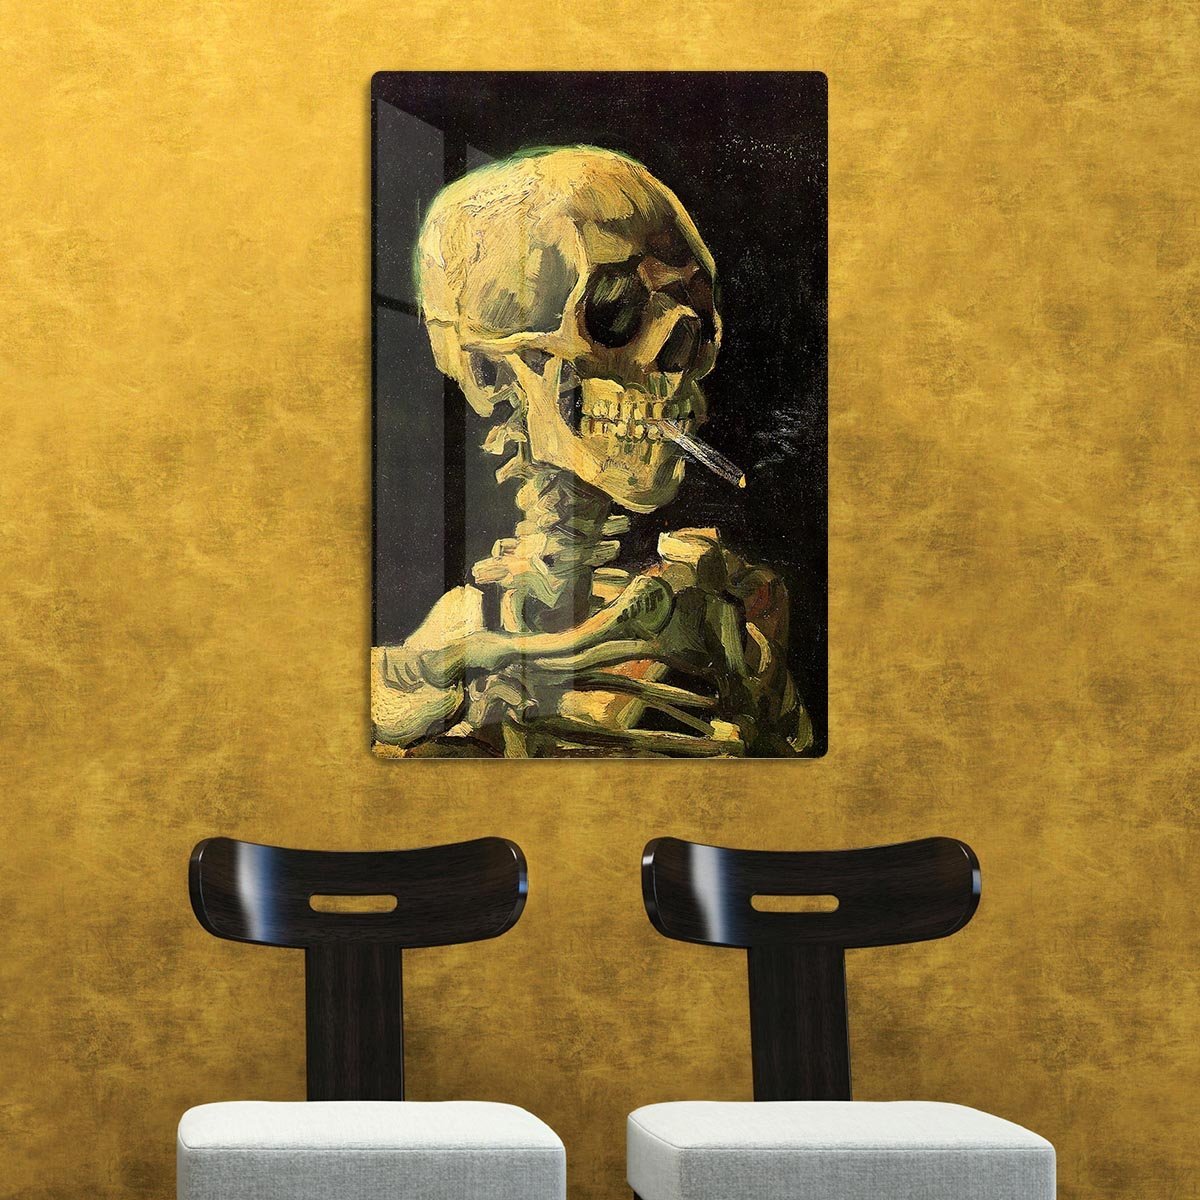 Skull with Burning Cigarette by Van Gogh HD Metal Print